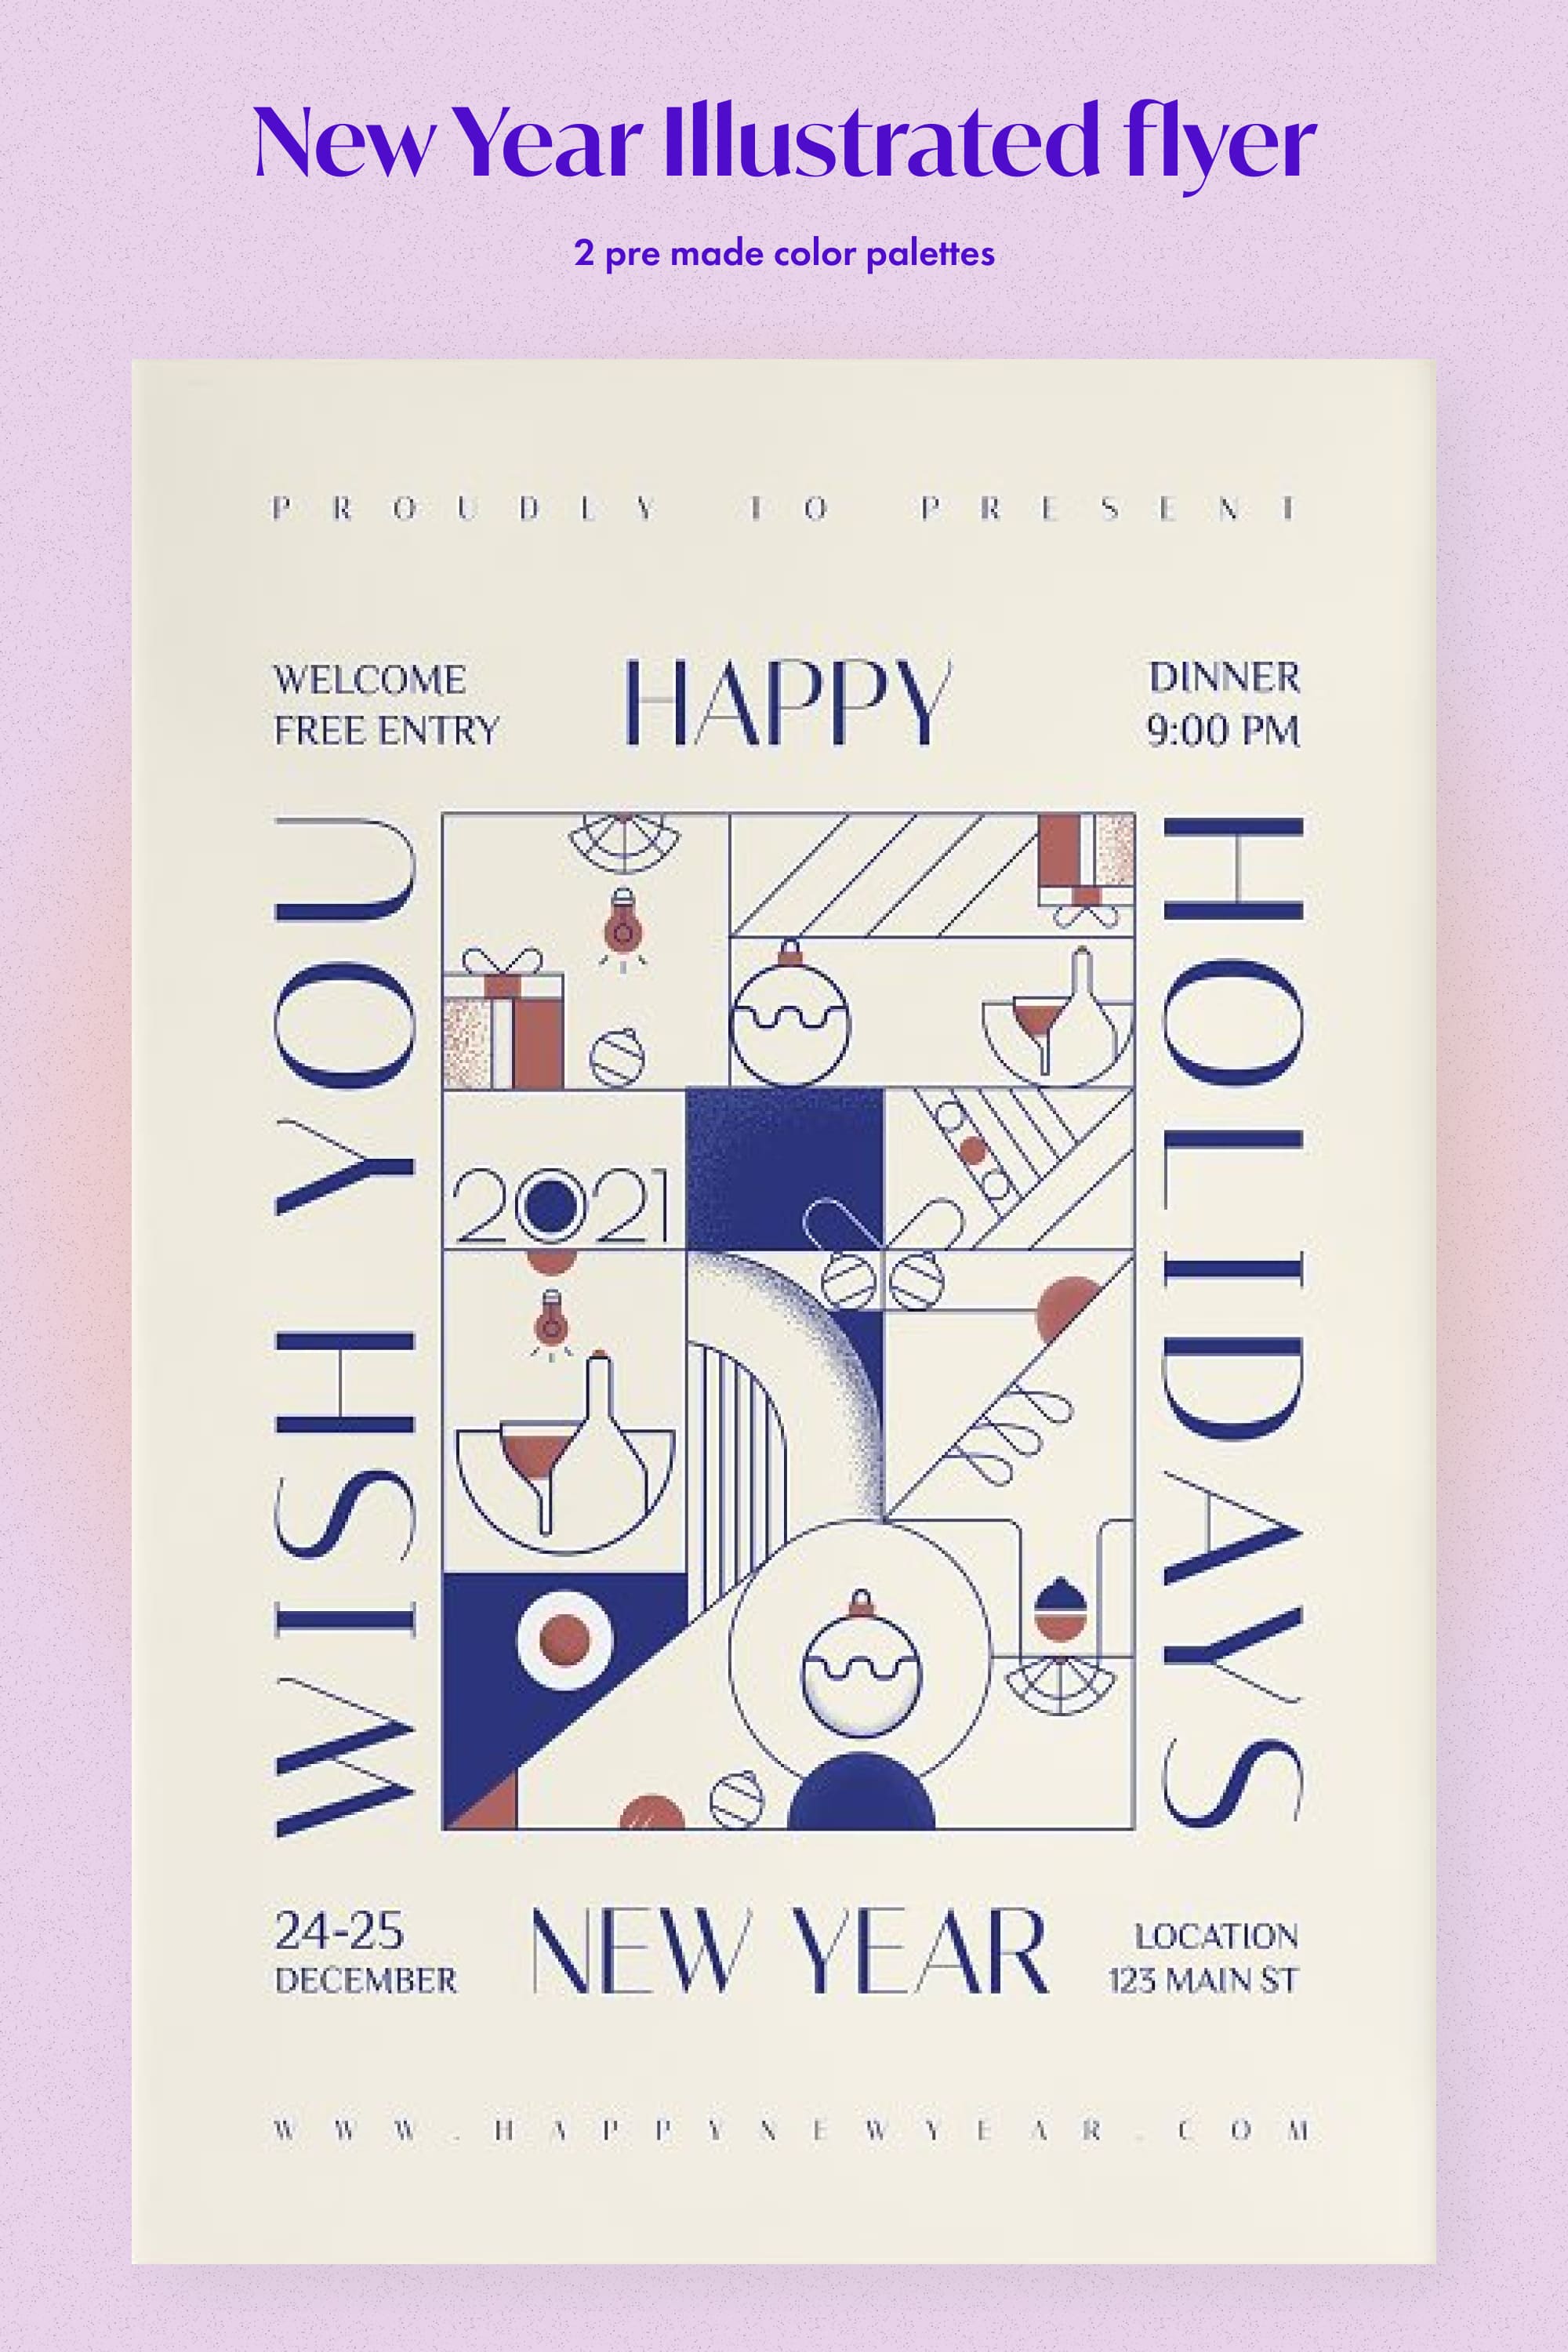 new year illustrated flyer pinterest